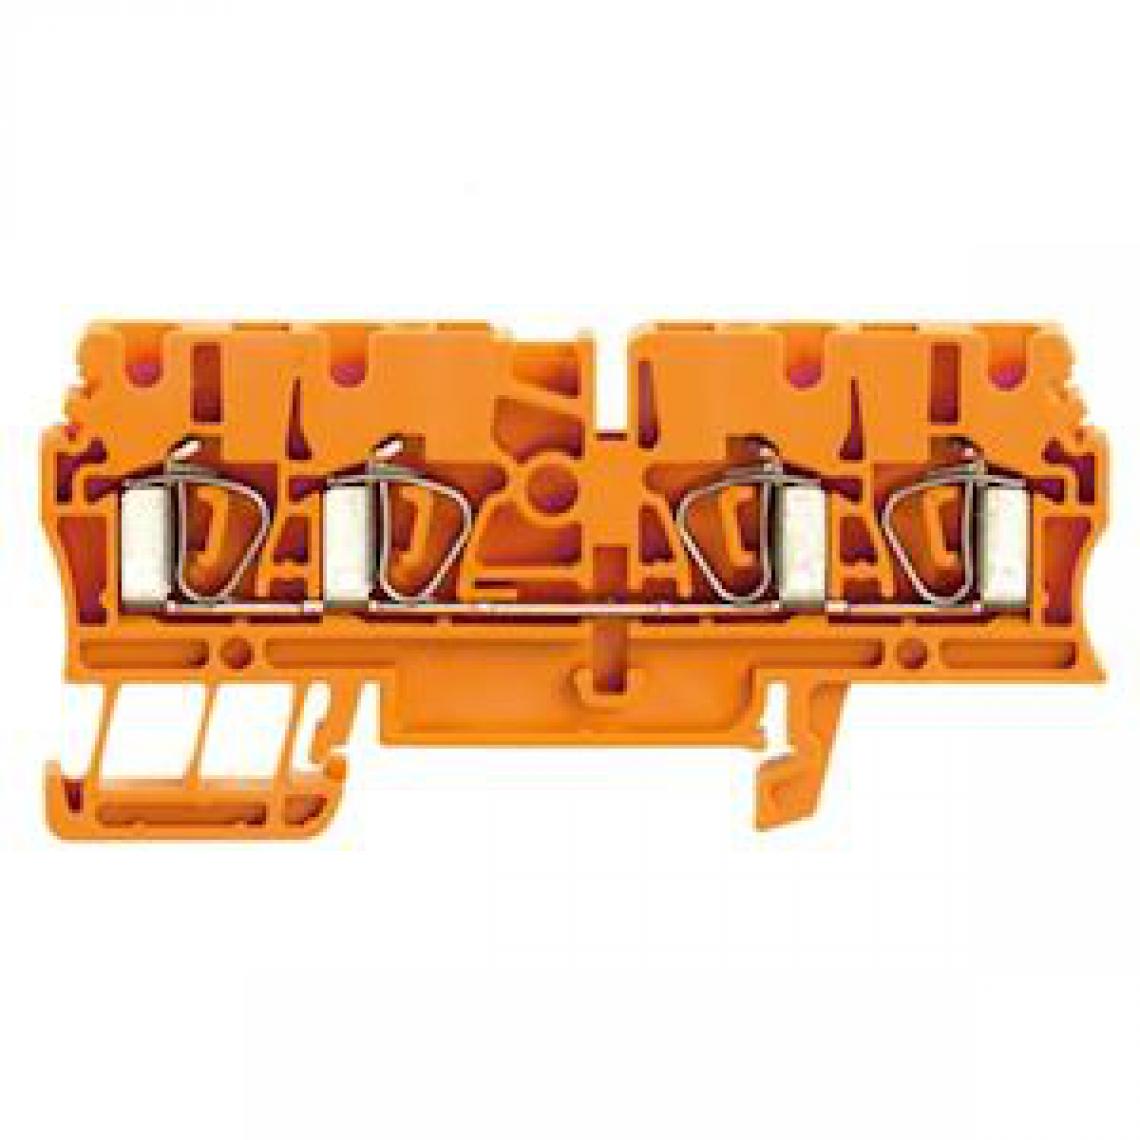 Weidmuller - bloc de jonction - passage - a ressort - zdu - 2.5 mm2 - 800v - 24a - orange - weidmuller 1636800000 - Autres équipements modulaires